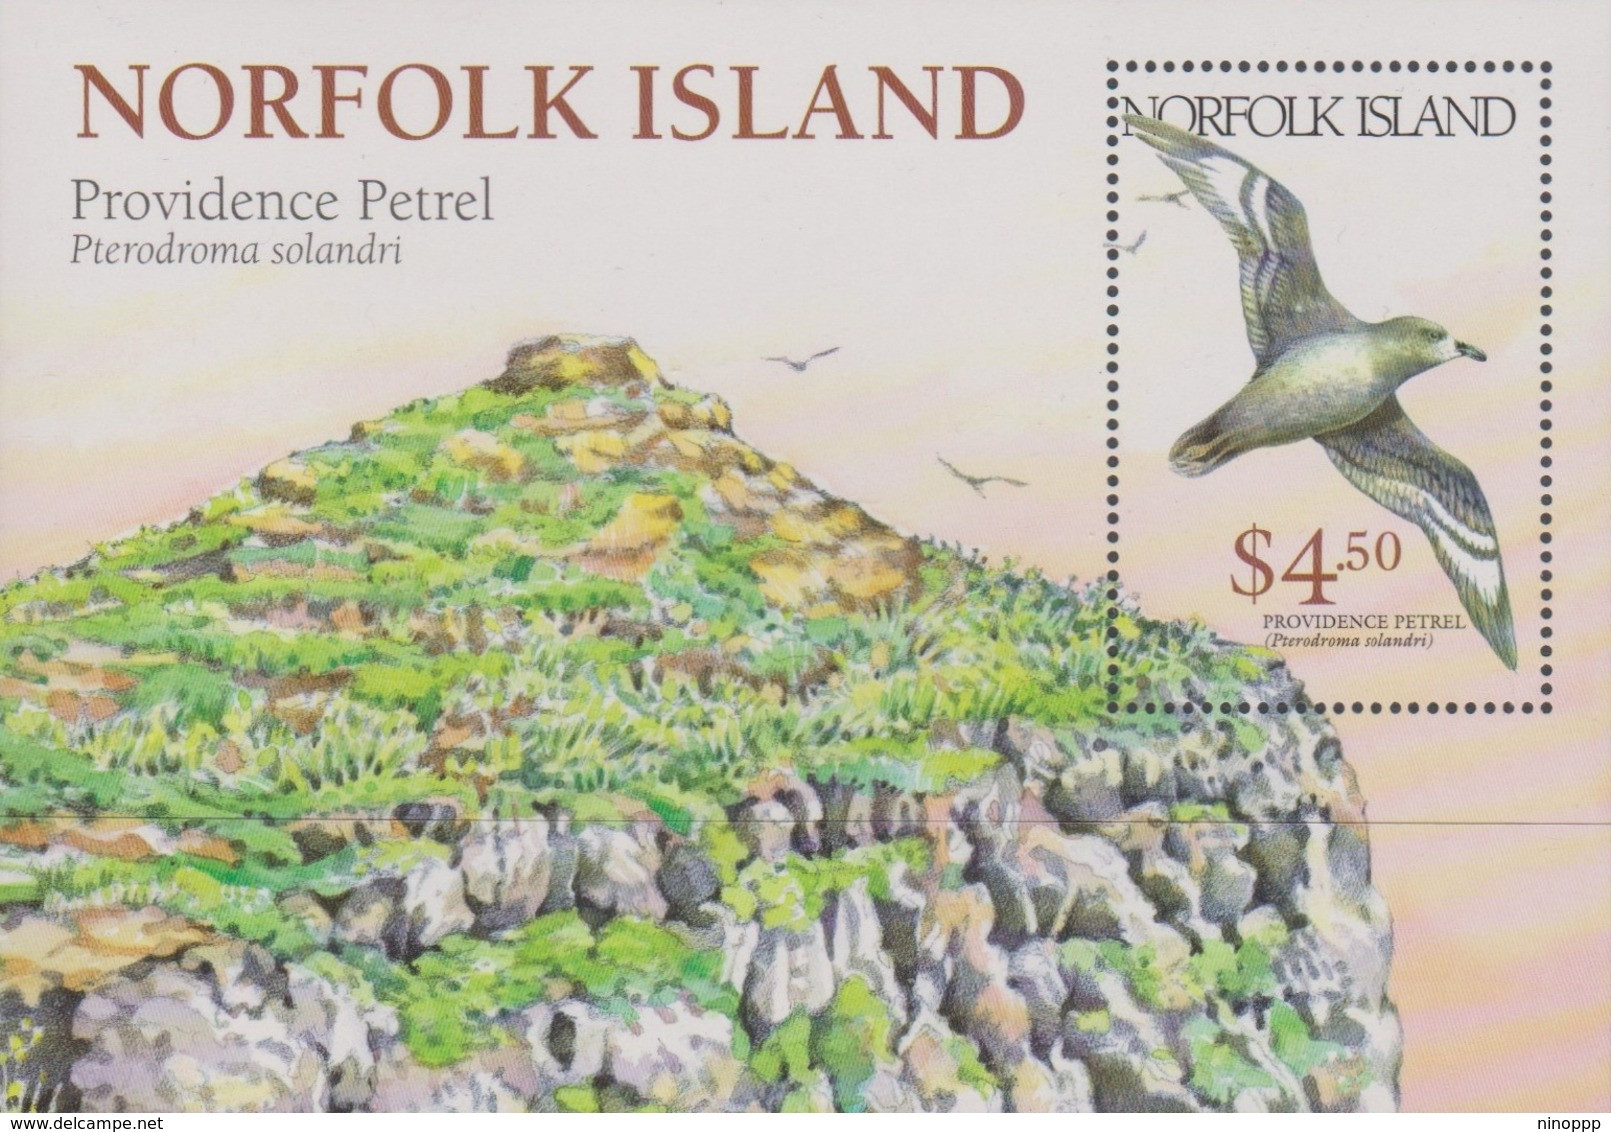 Norfolk Island ASC 689 MS 1999 Providence Petrel, Miniature Sheet, Mint Never Hinged - Norfolk Eiland